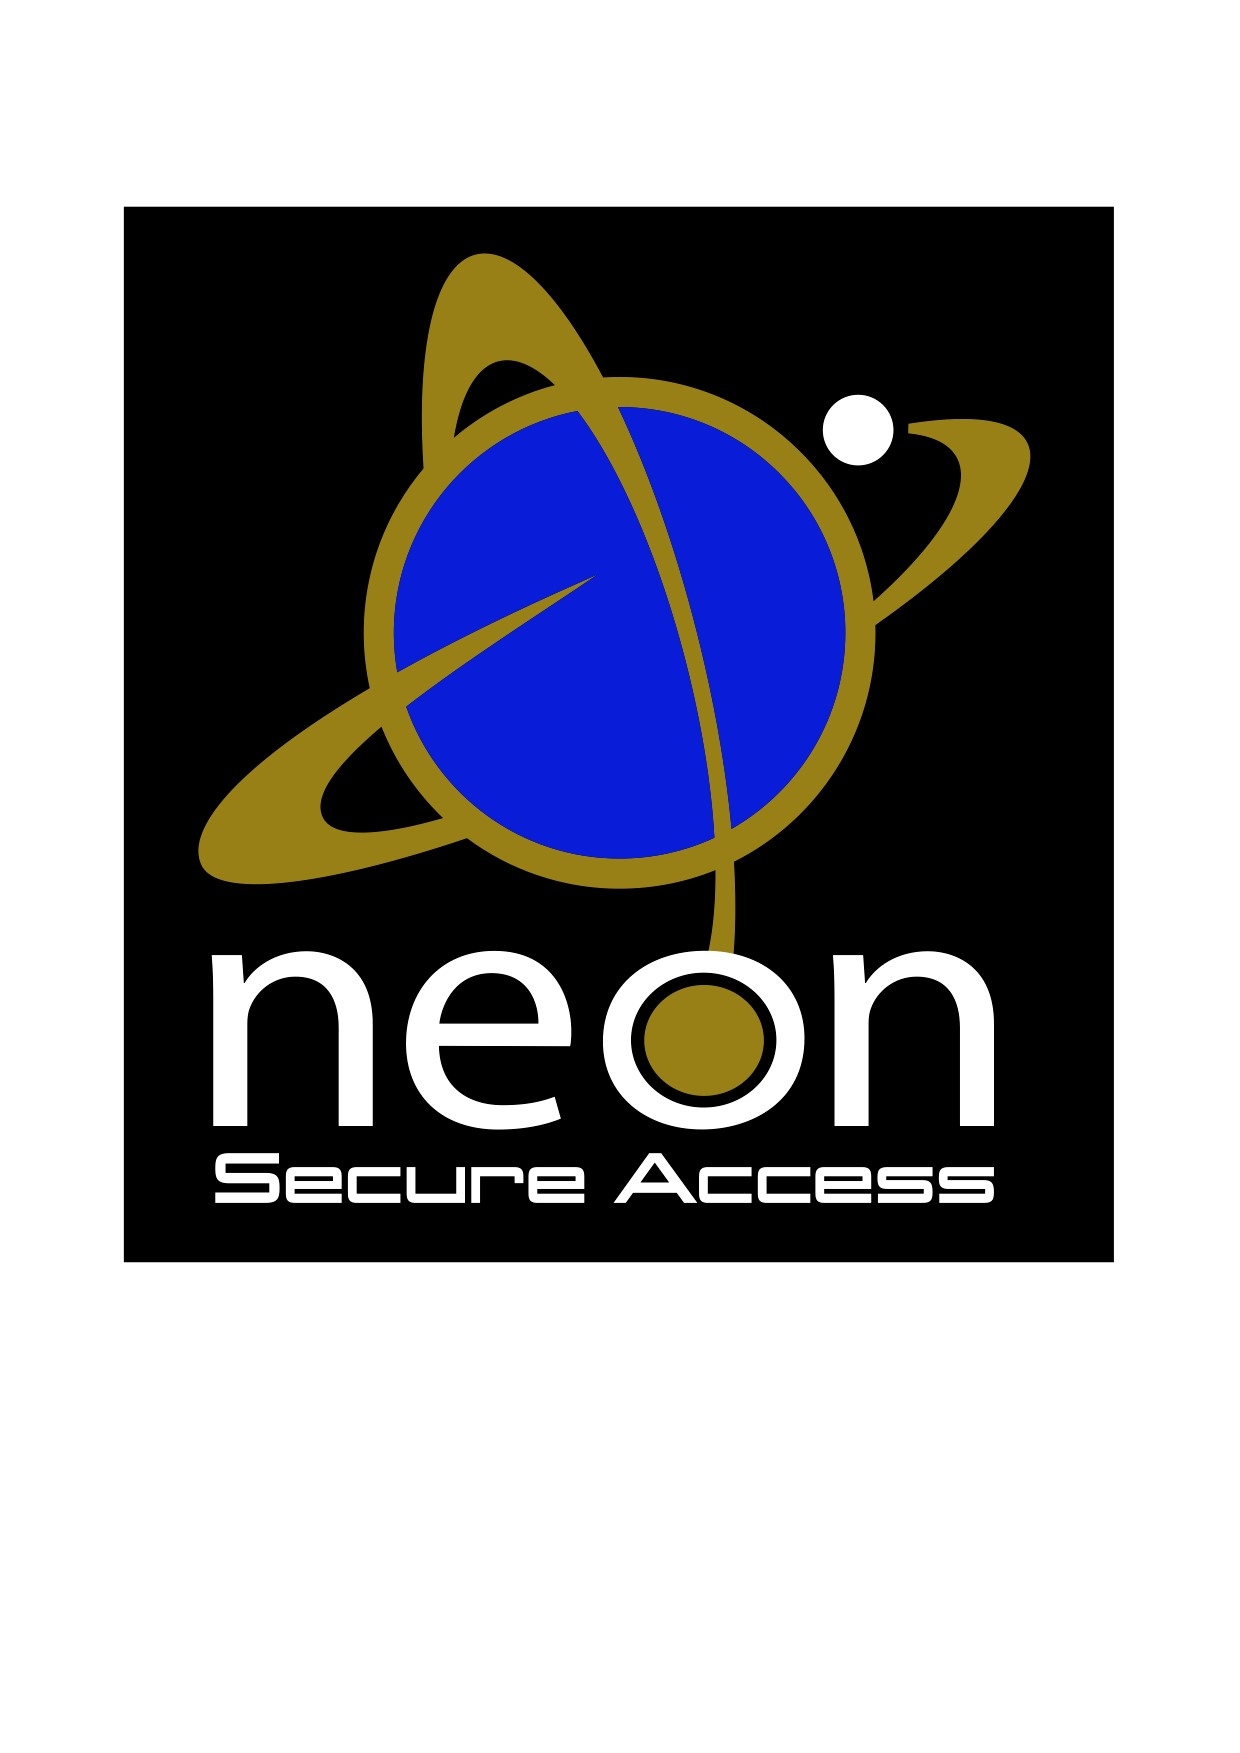 Neon Secure Access Ltd